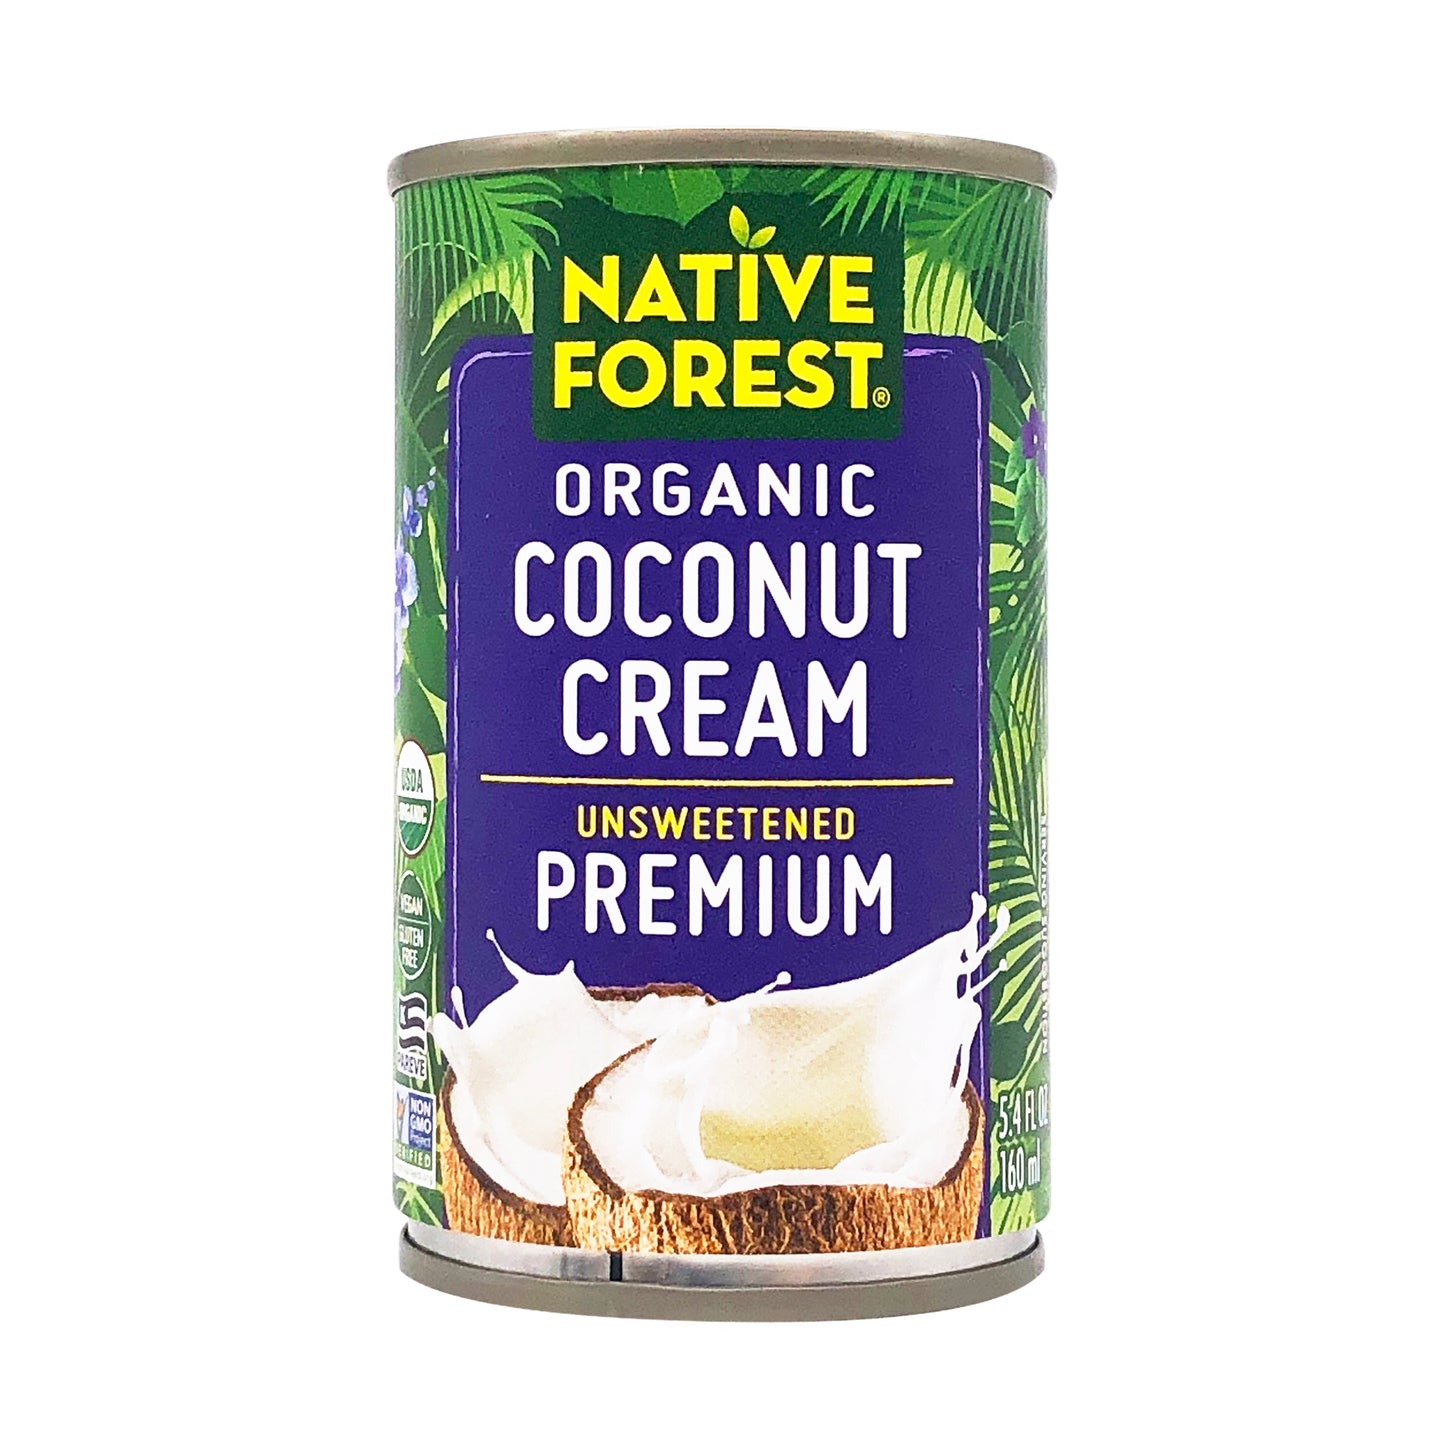 Native Forest, Organic Unsweetened Premium Coconut Cream 5.4oz